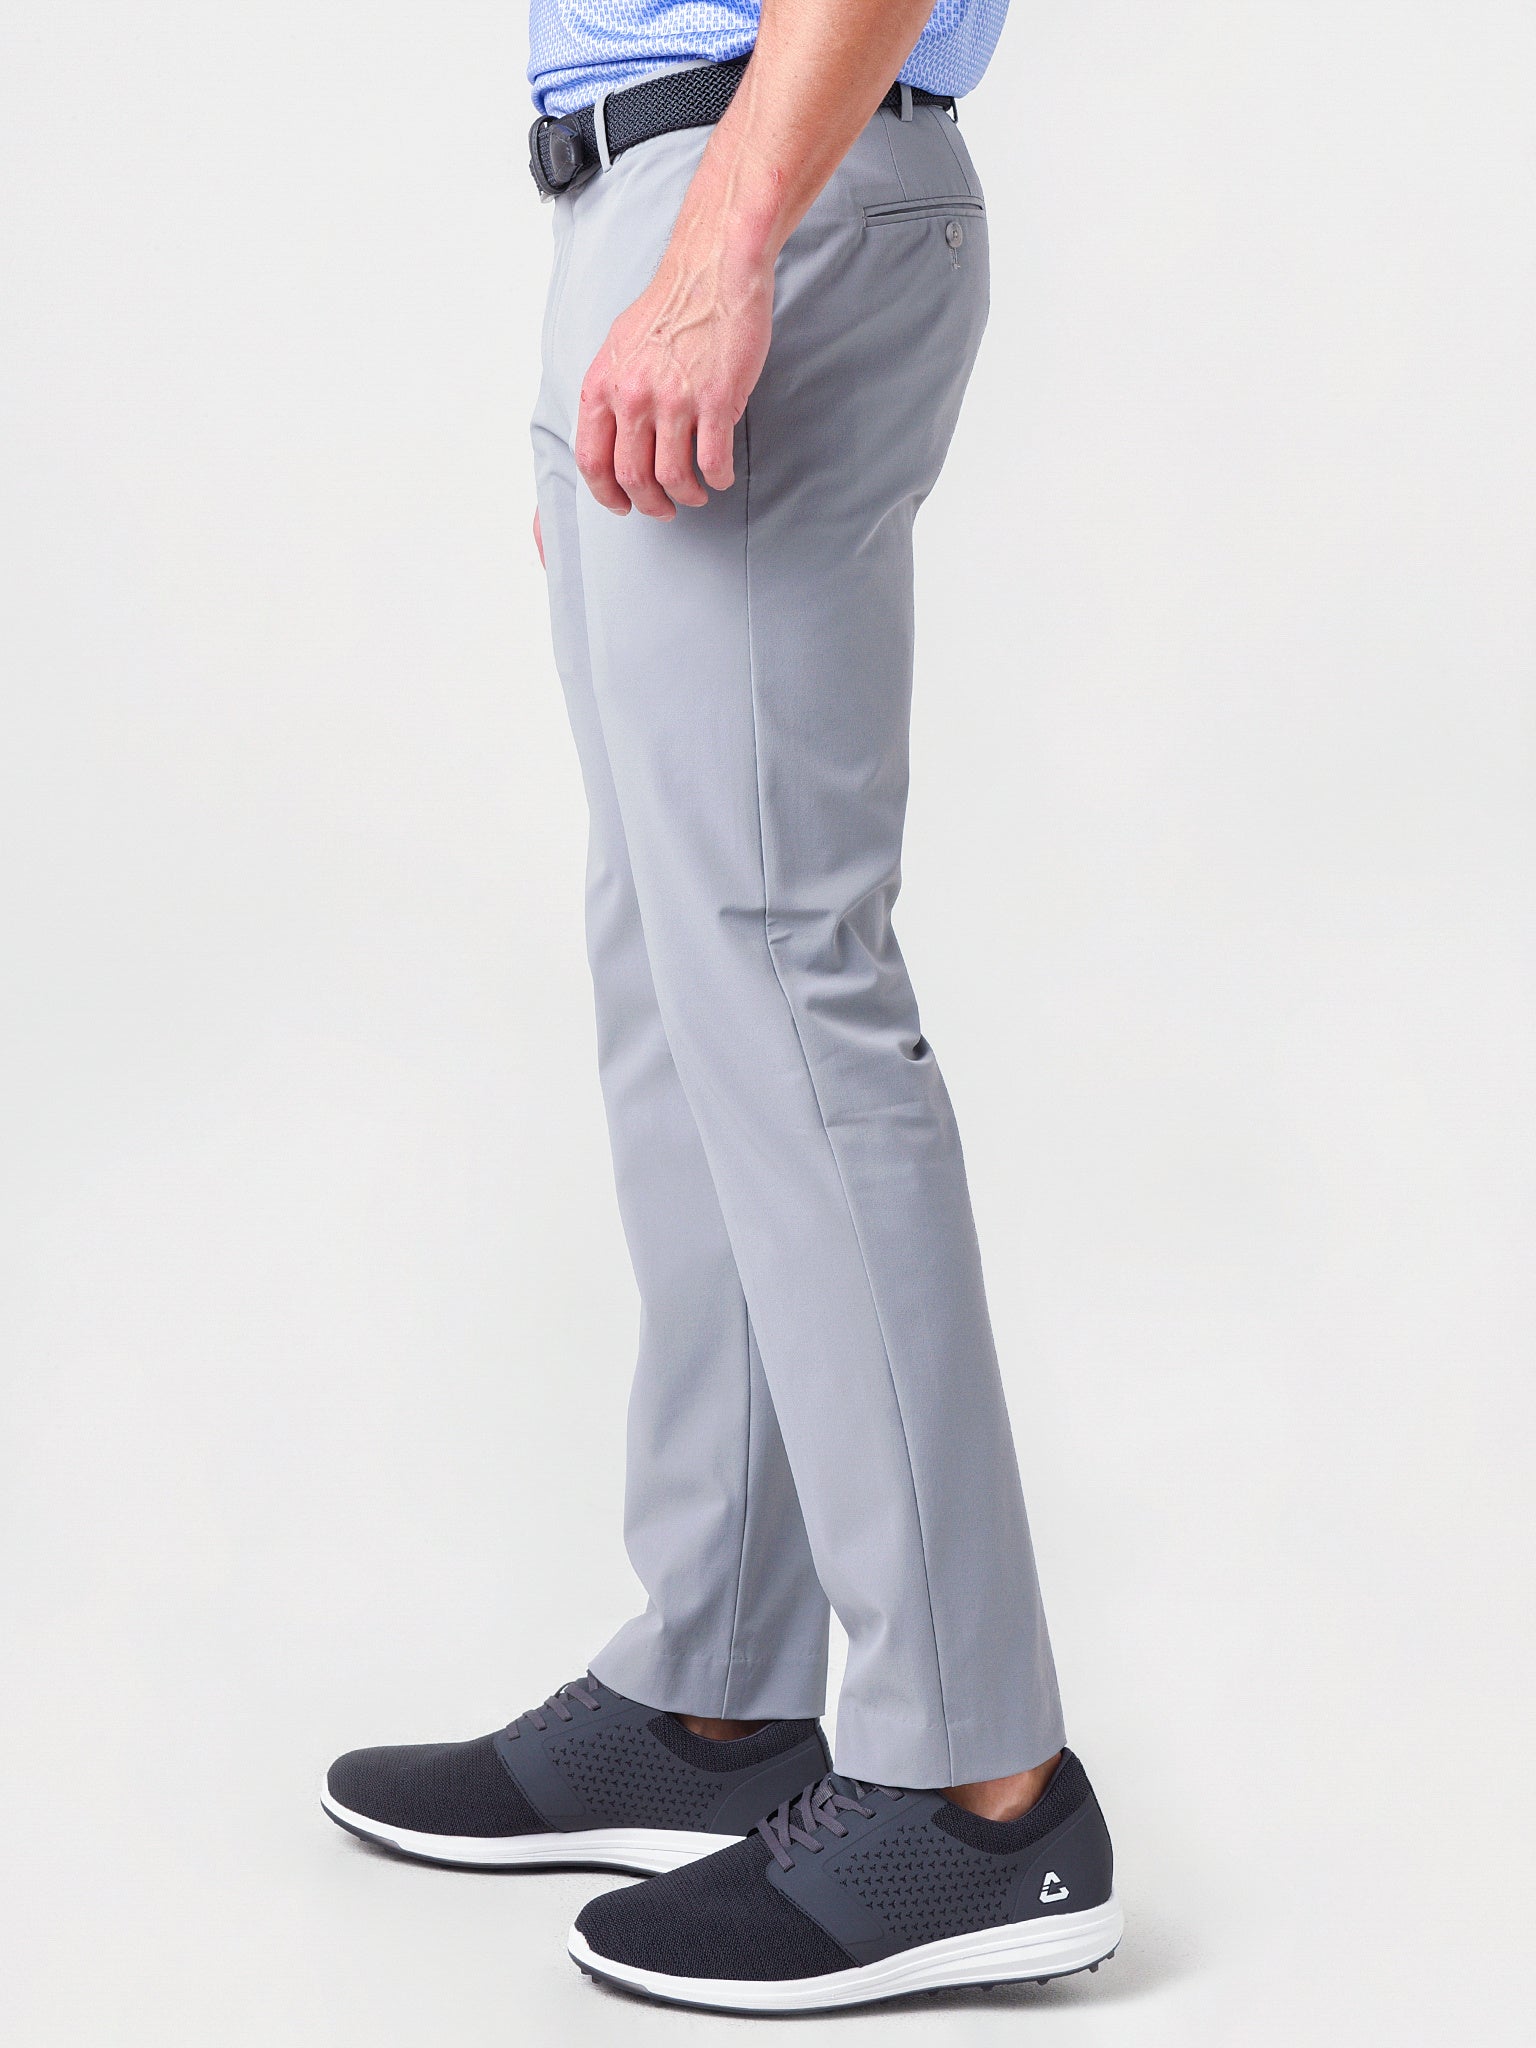 Peter Millar Crown Sport Golf Pants Mens 33x28 Light Brown Polyester 11  Rise